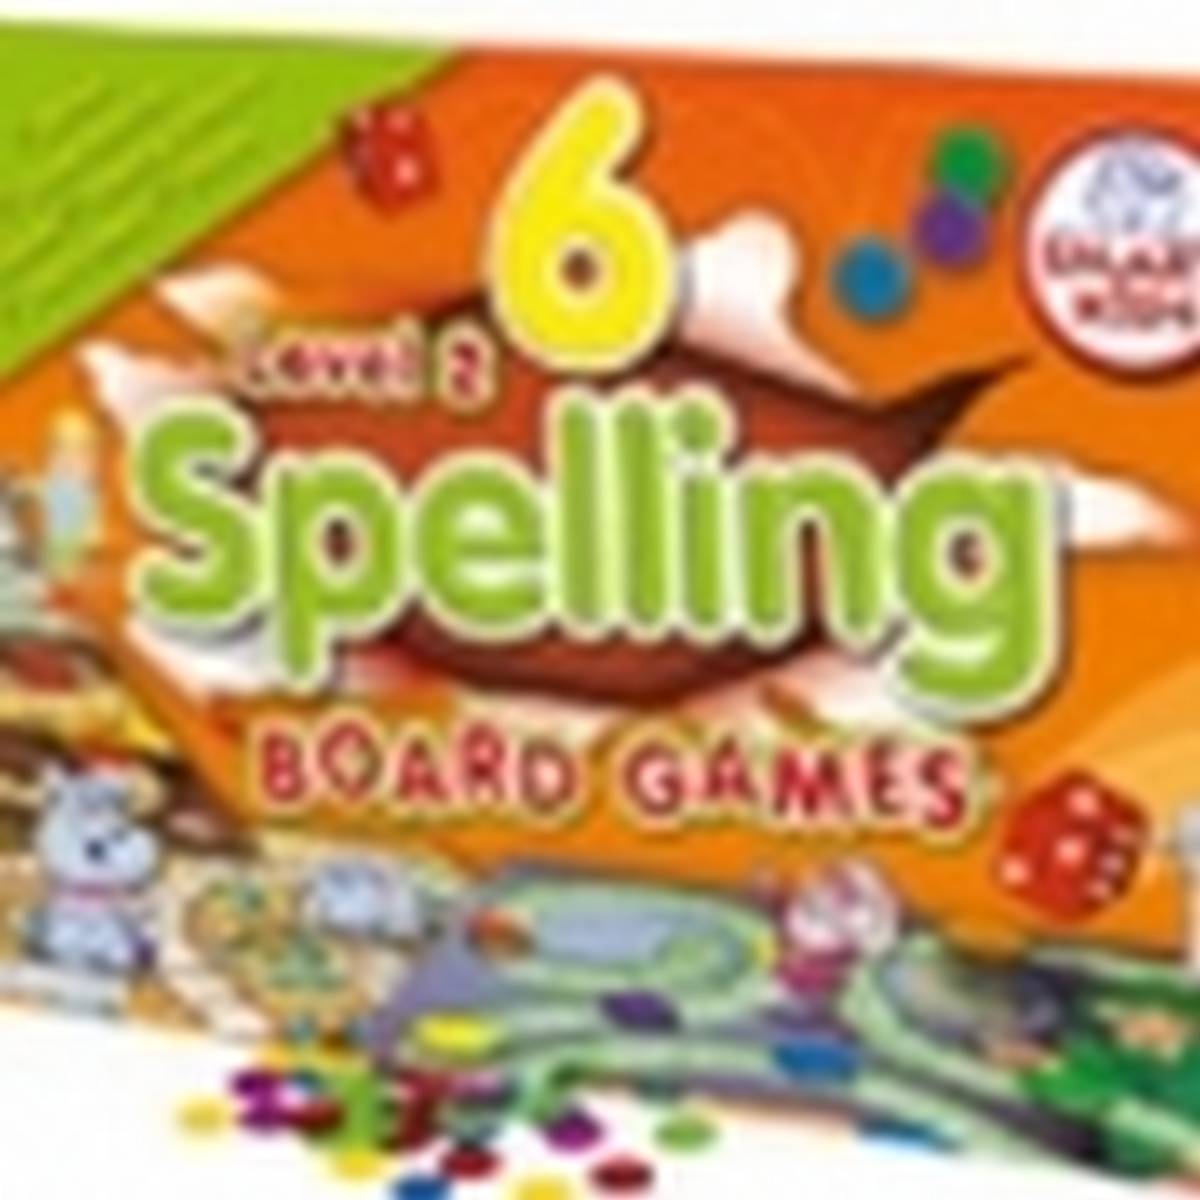 Spelling Board Games Level 2 Set of 6